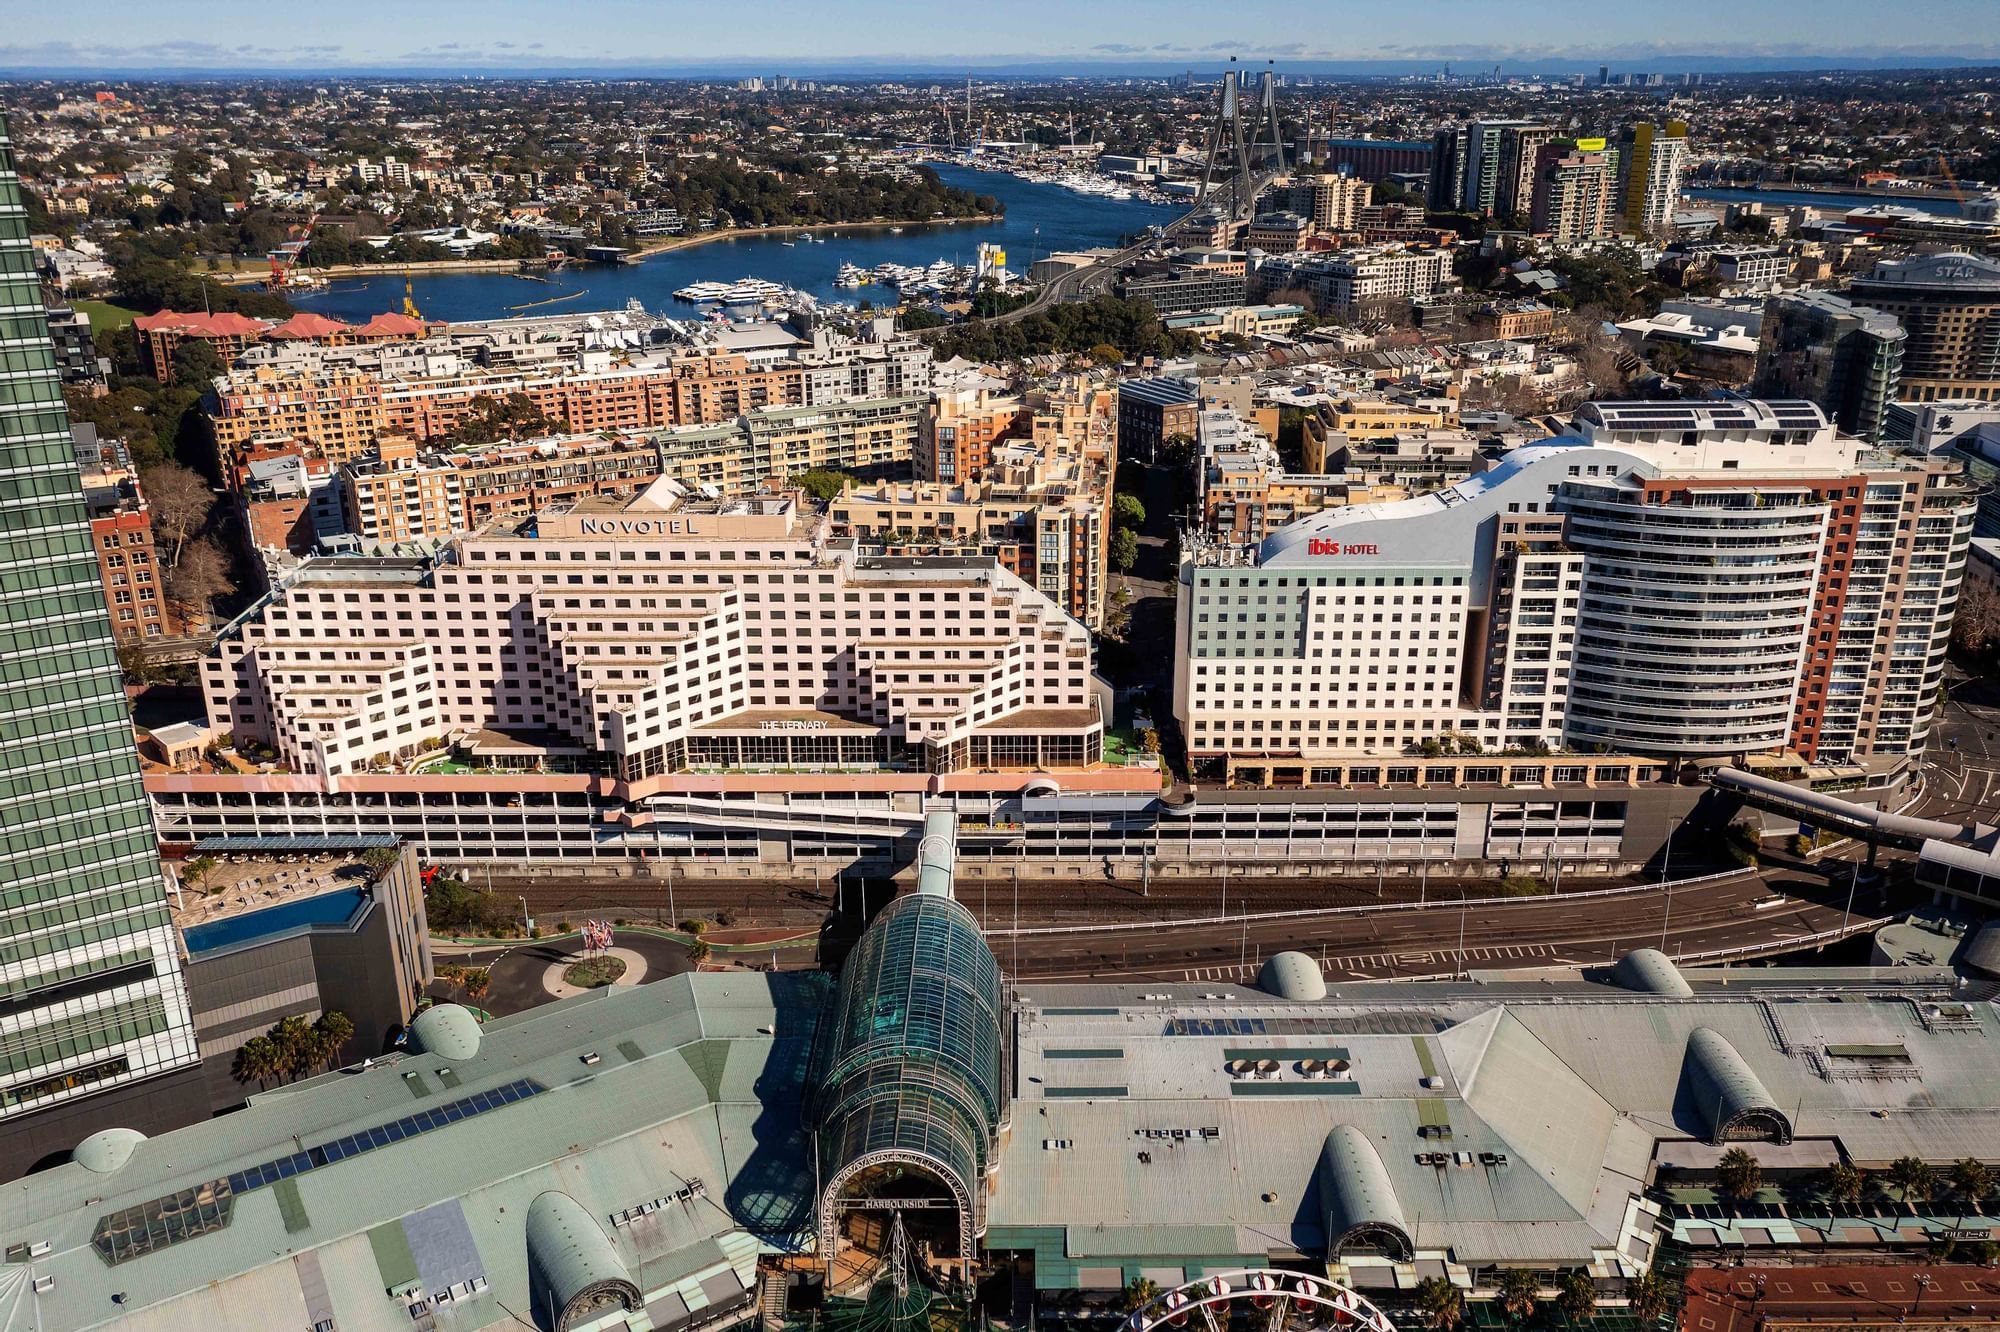 Novotel Darling Harbour | Sydney Accommodation | Sydney Hotels | Darling Harbour Hotels